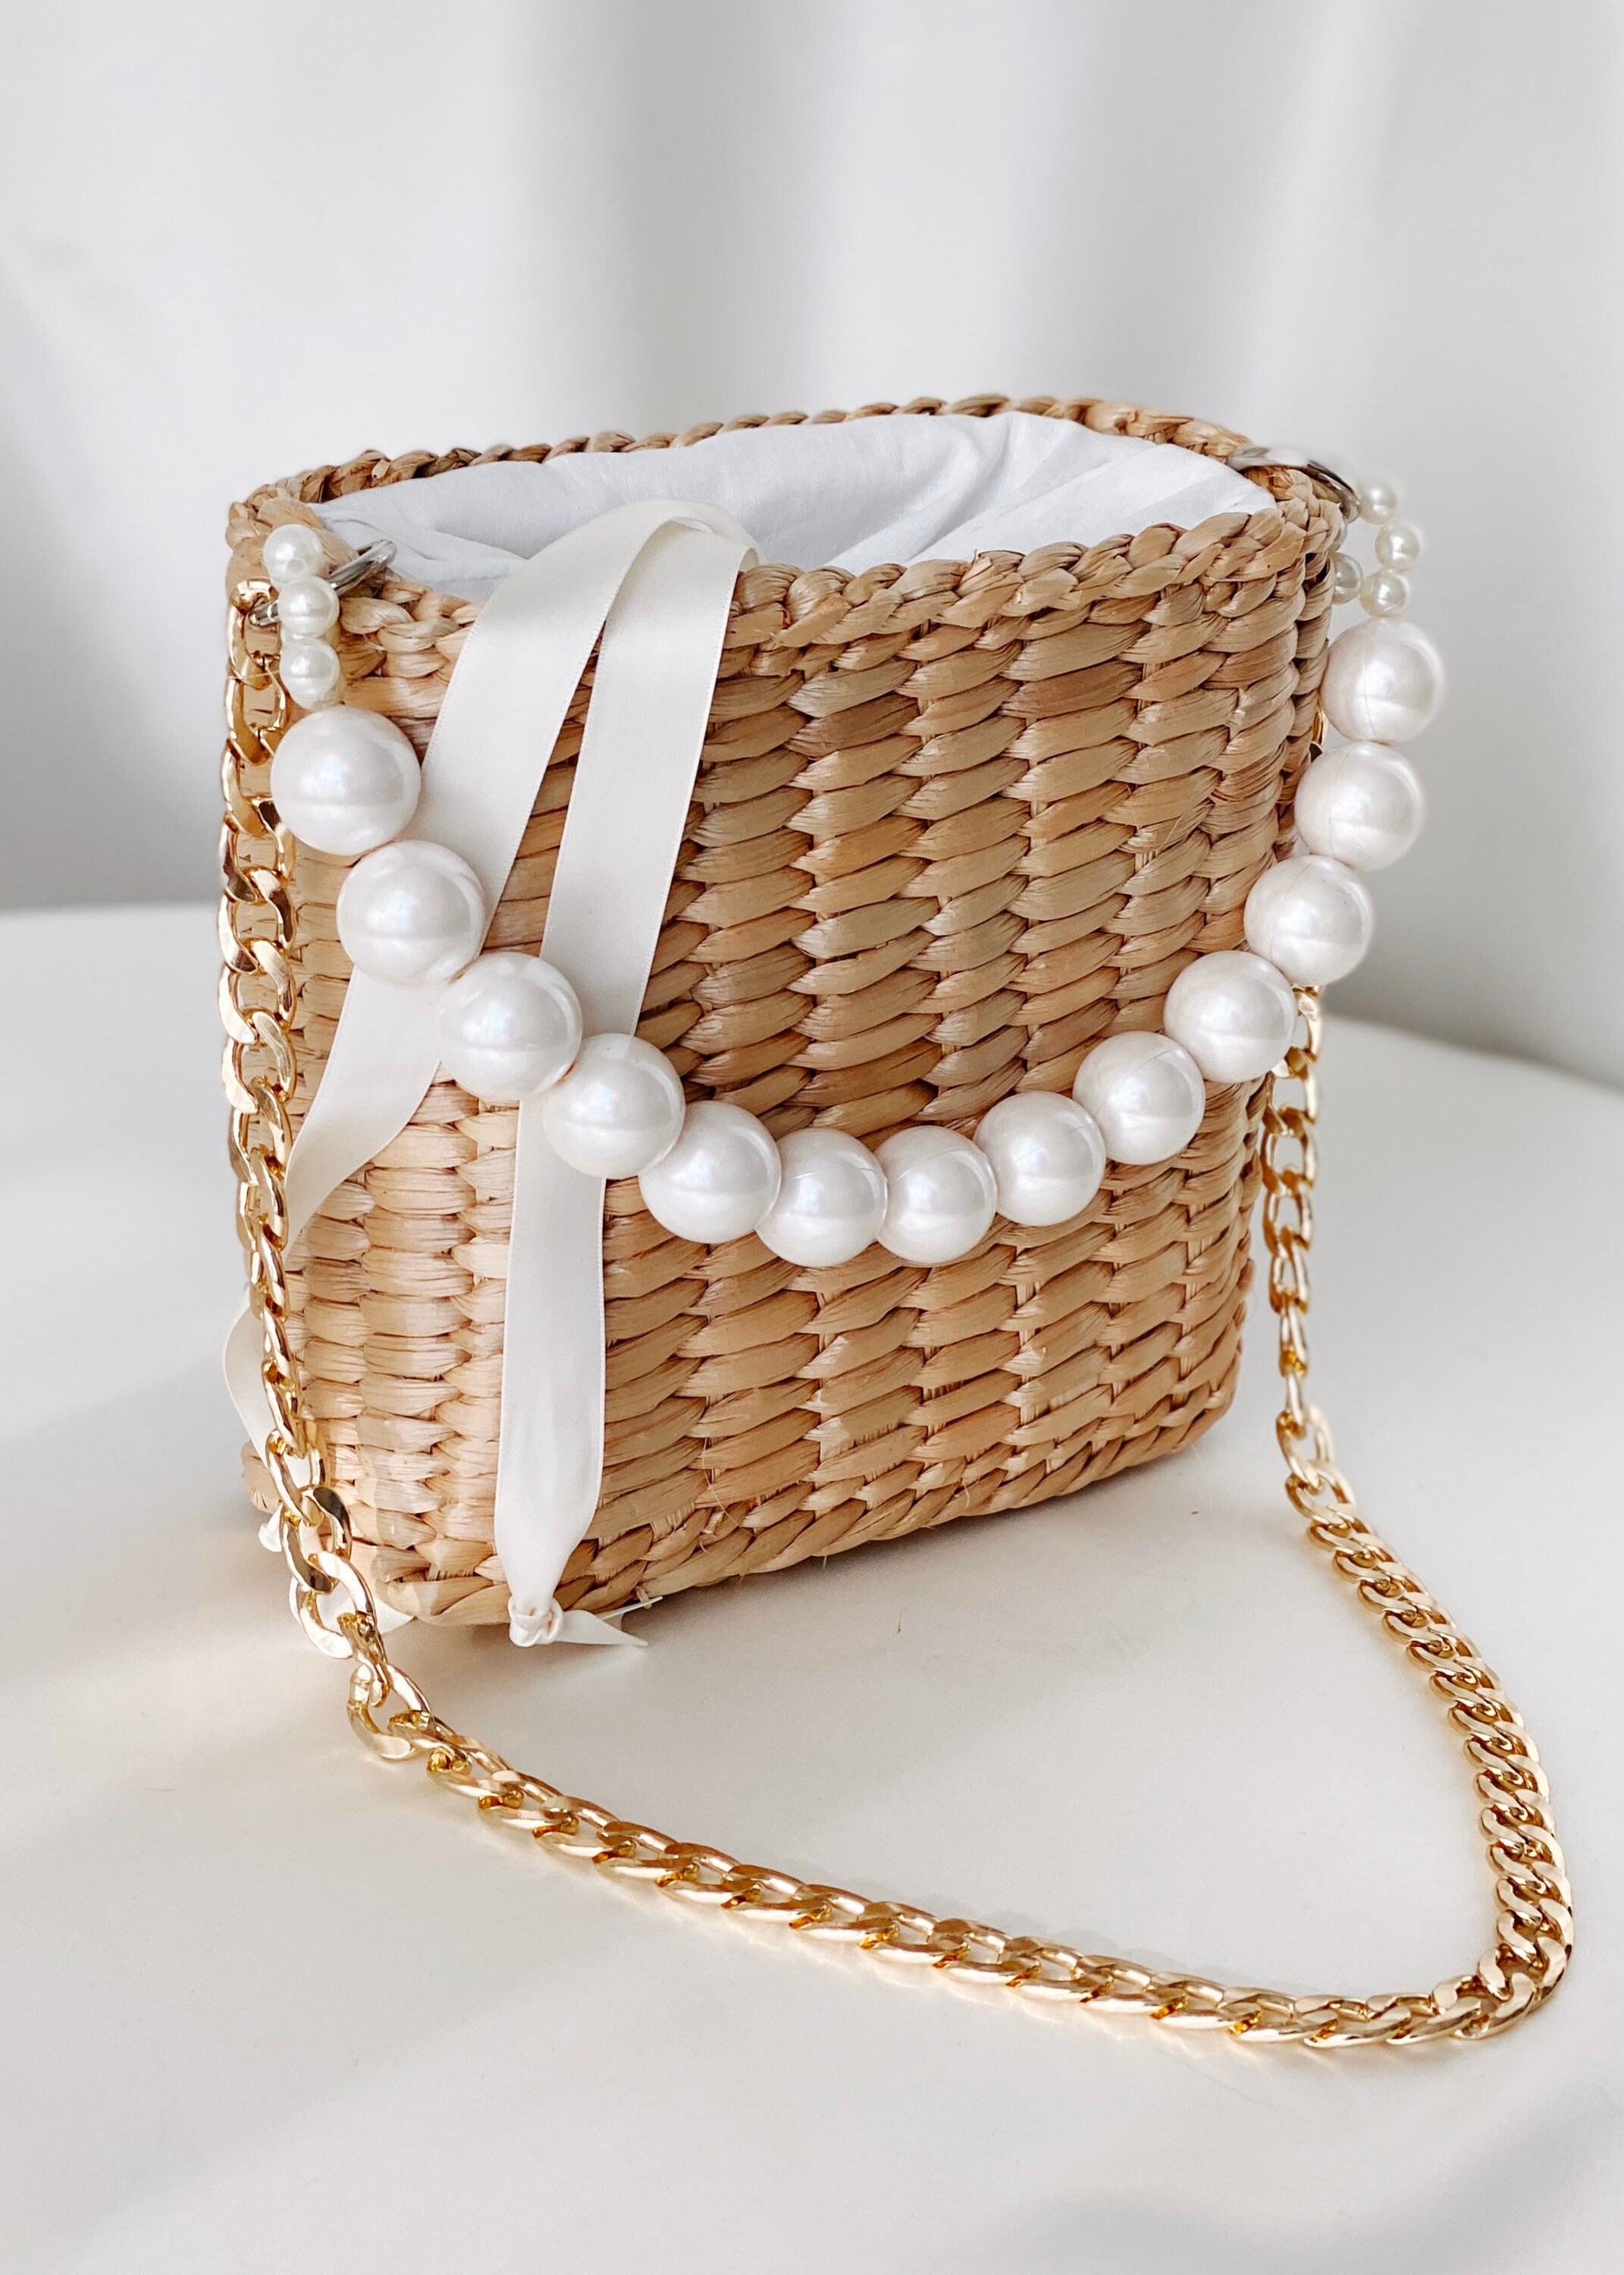 Pearl Tote Straw Bag Woven Handbag | Etsy